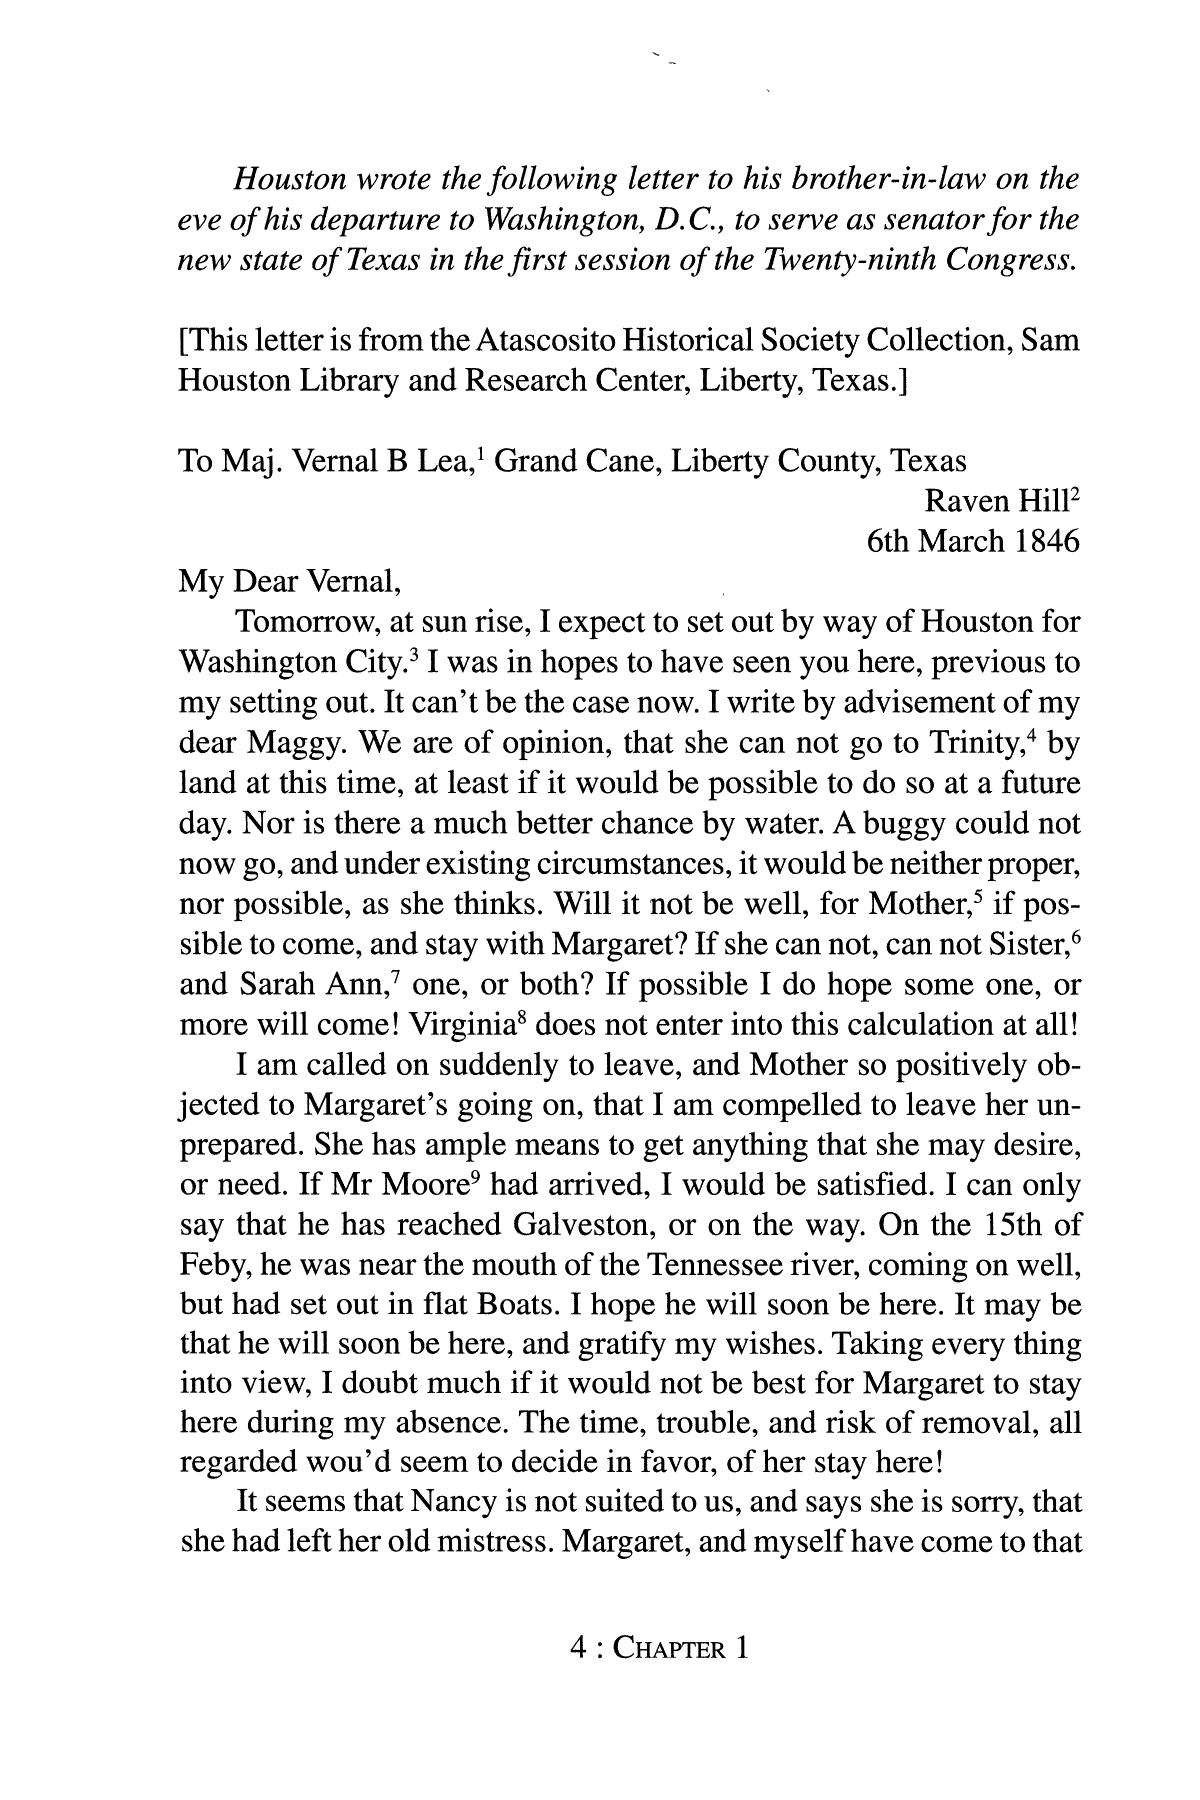 The Personal Correspondence of Sam Houston, Volume 2: 1846-1848
                                                
                                                    4
                                                